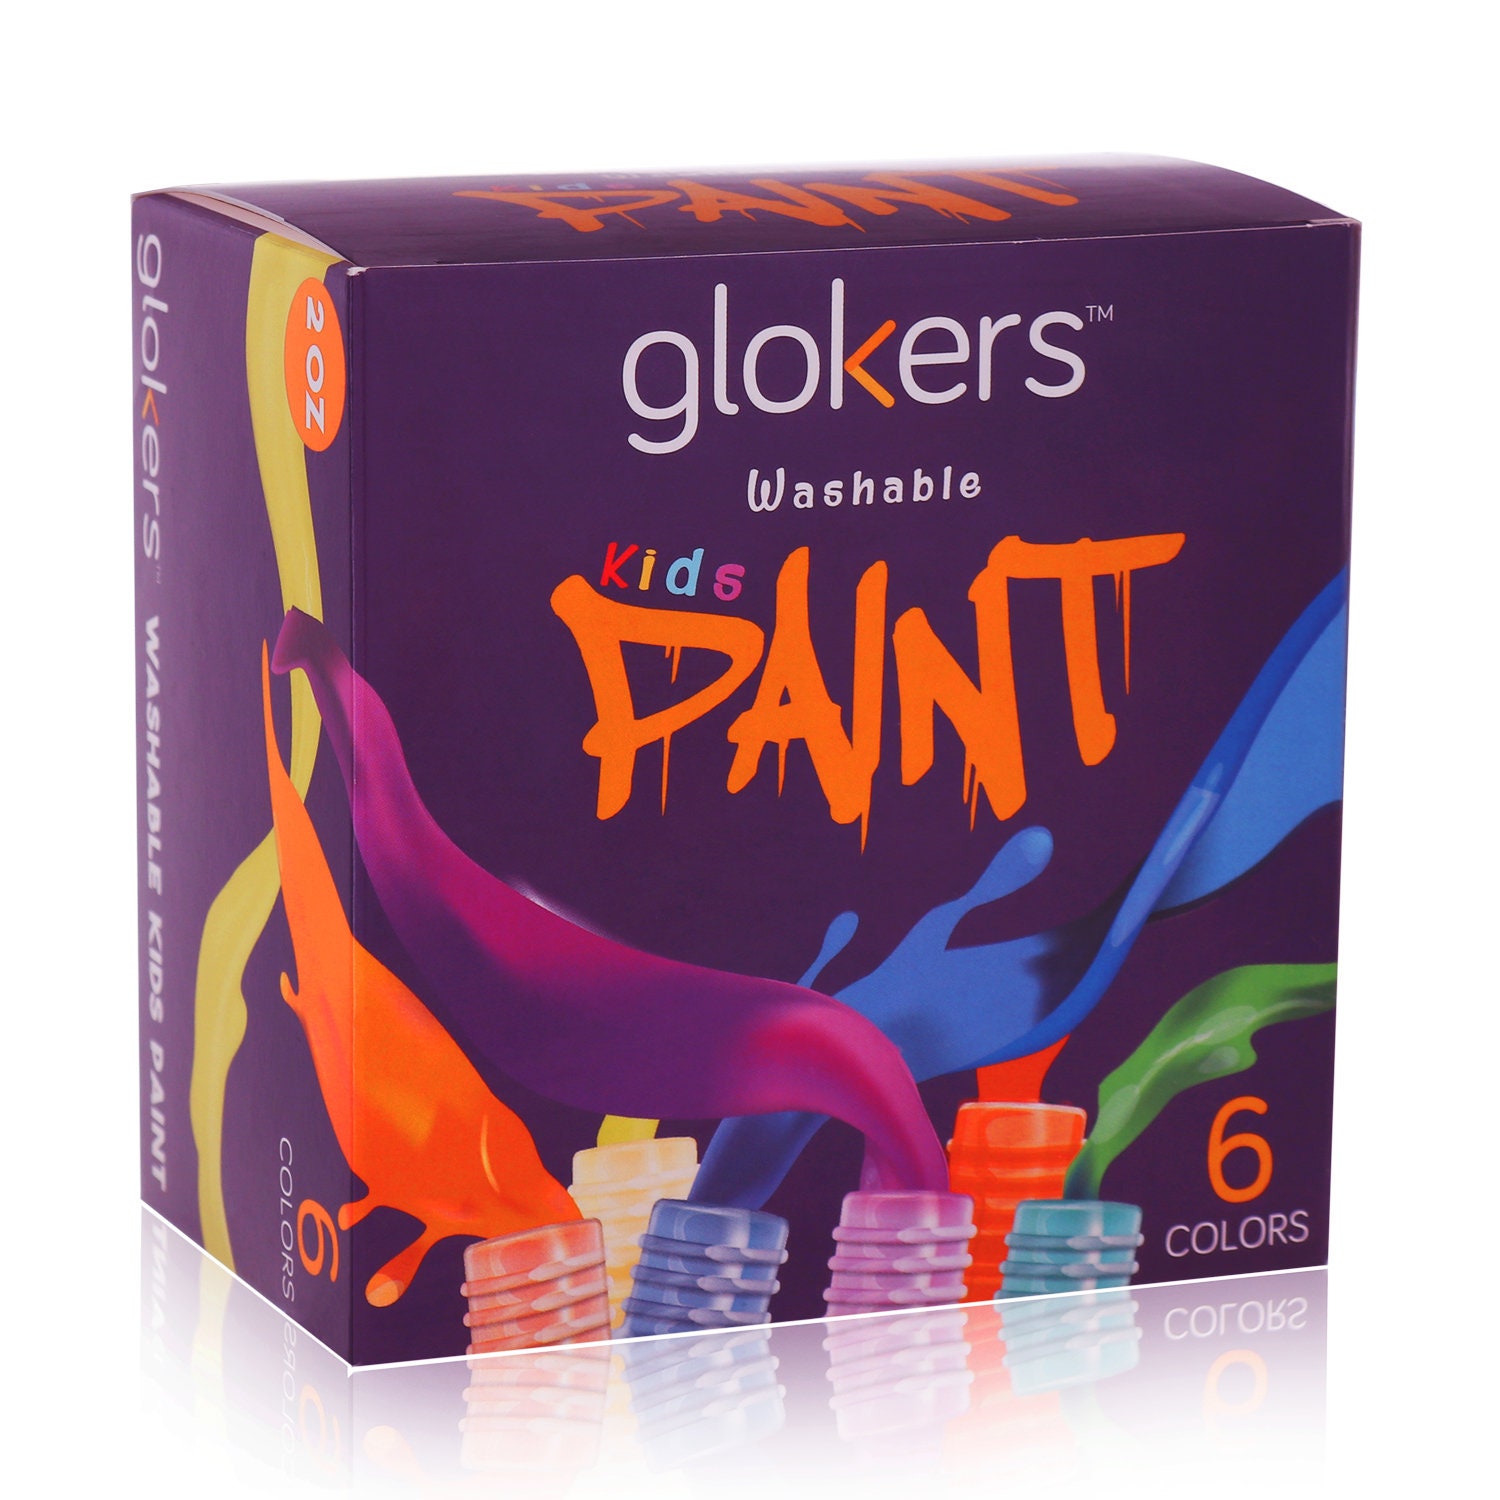 EXTRIC Washable Paint for Kids - 12 Count Finger Paint (2 oz Each) Tempera Paint - Non Toxic Kids Paint for Art, Craft - Kids Paint